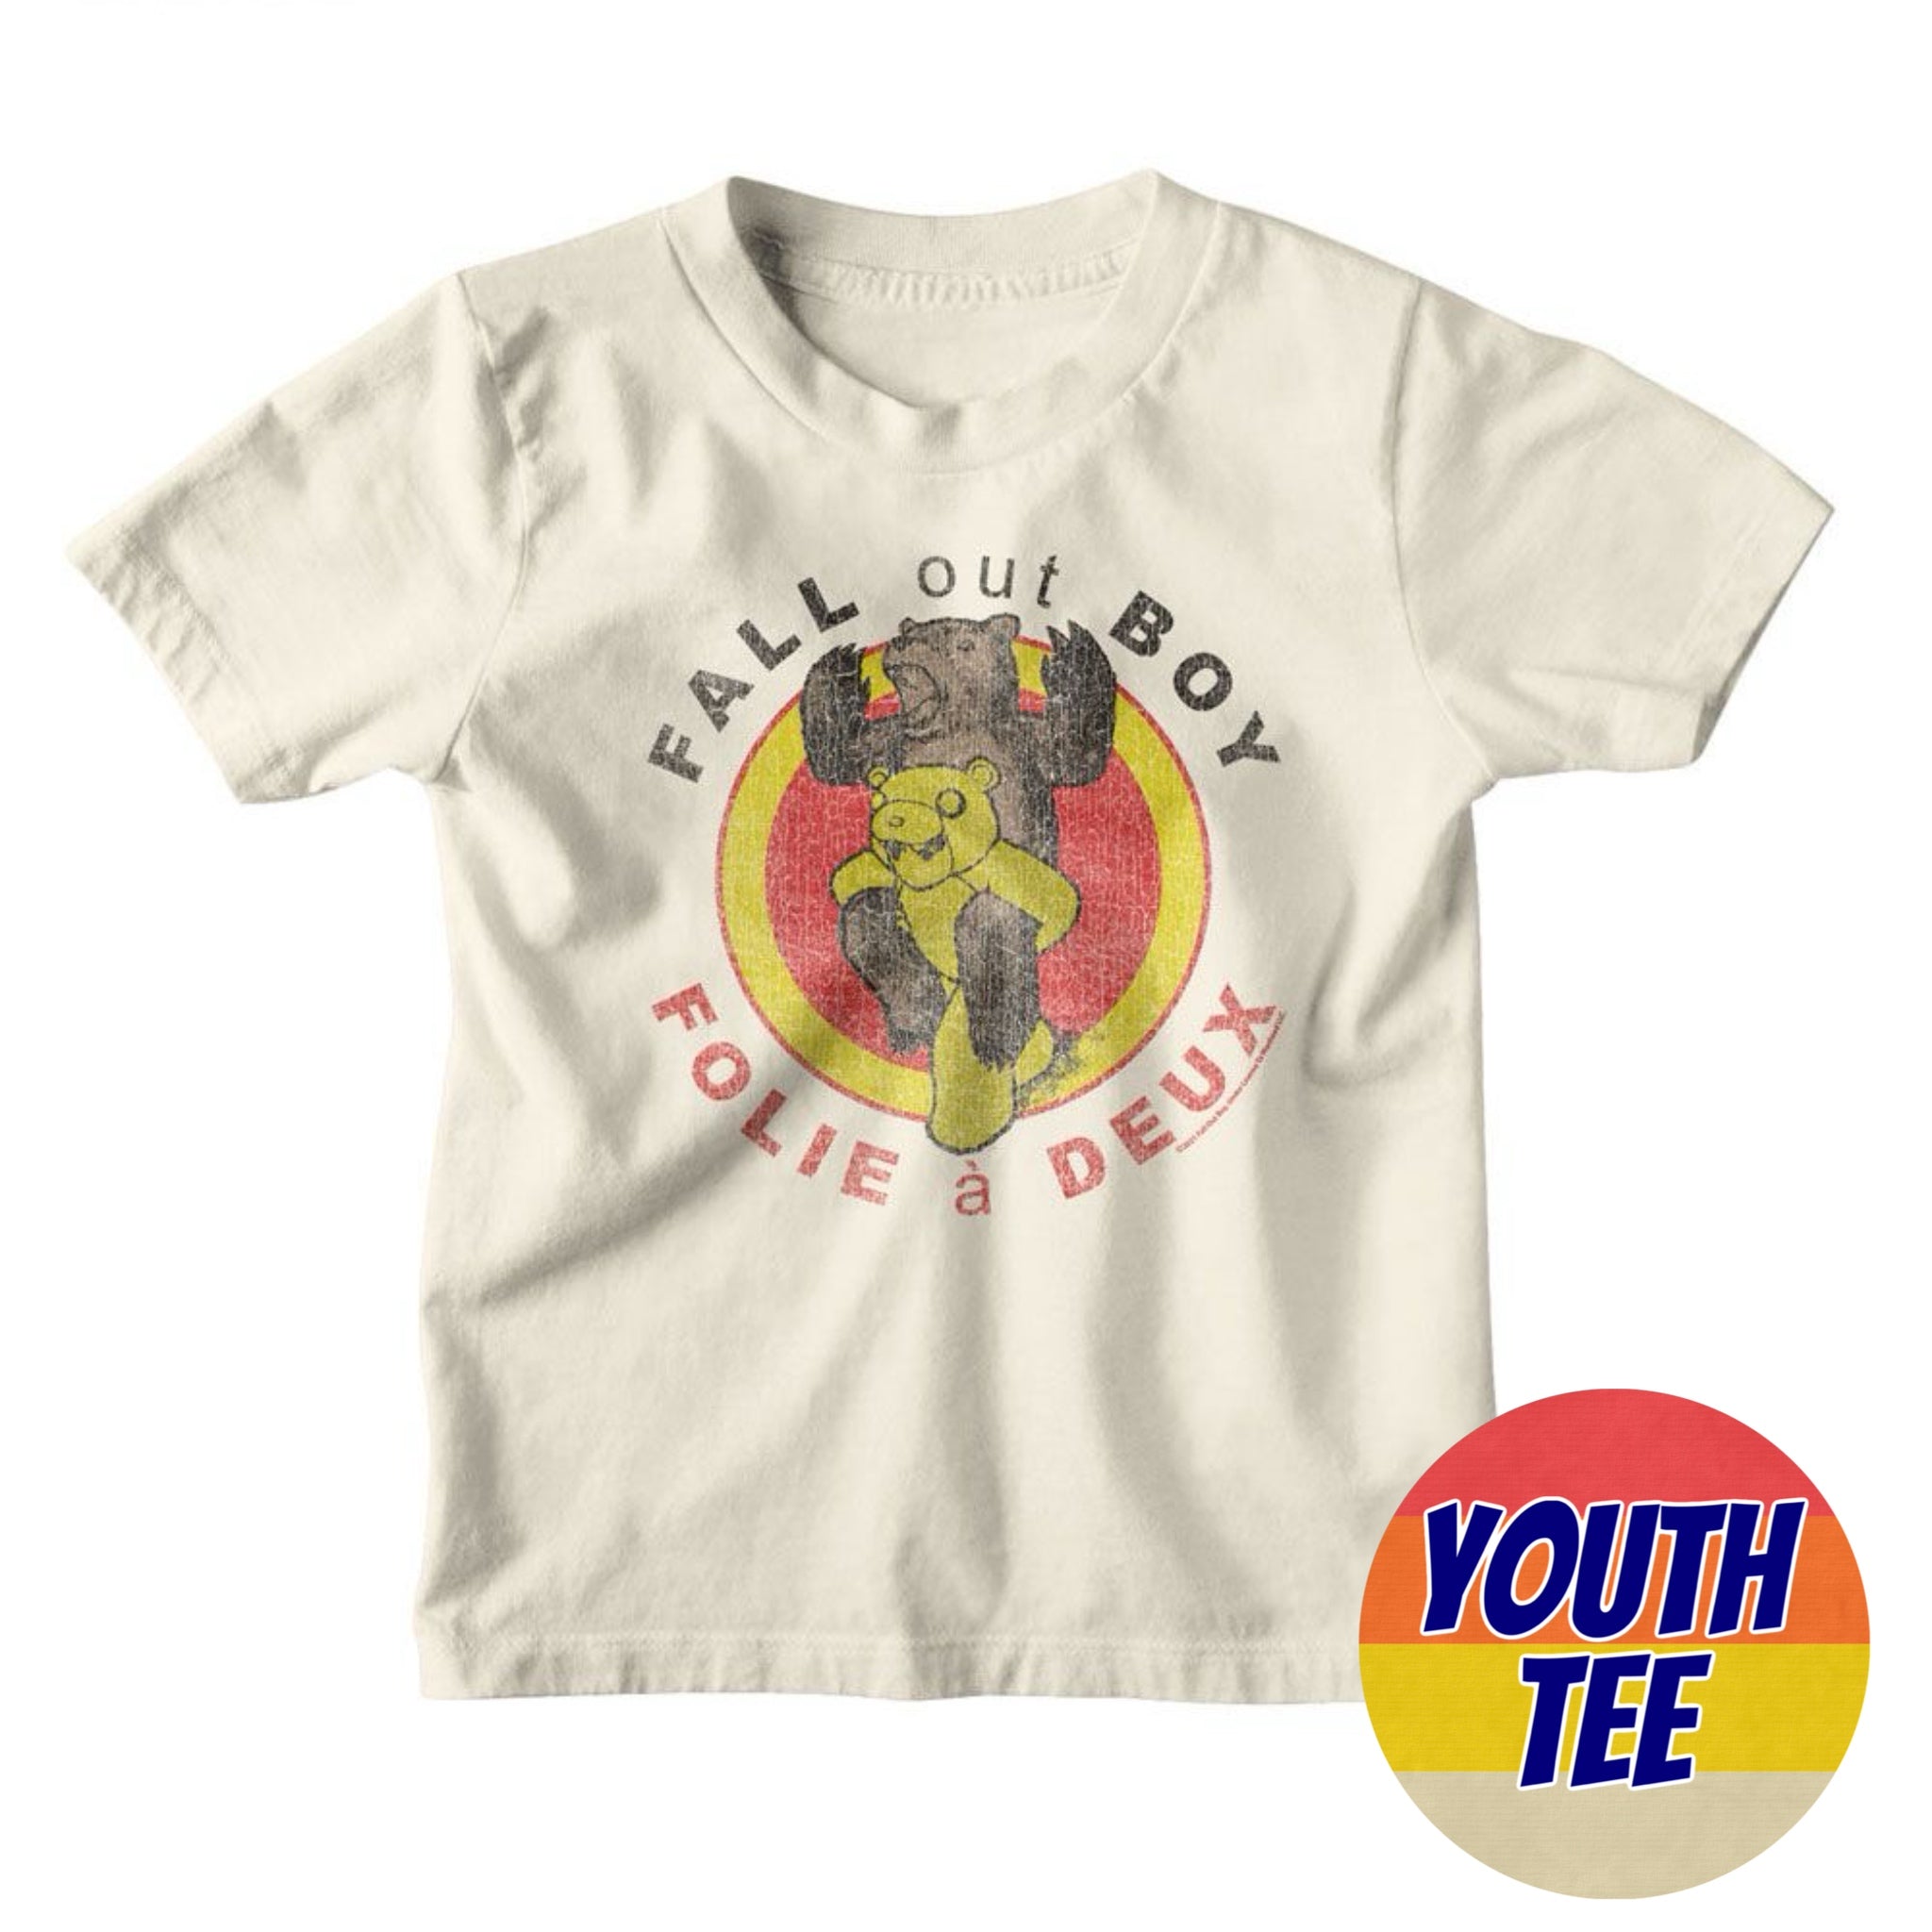 Youth Fall Out Boy Folie A Deux T-Shirt